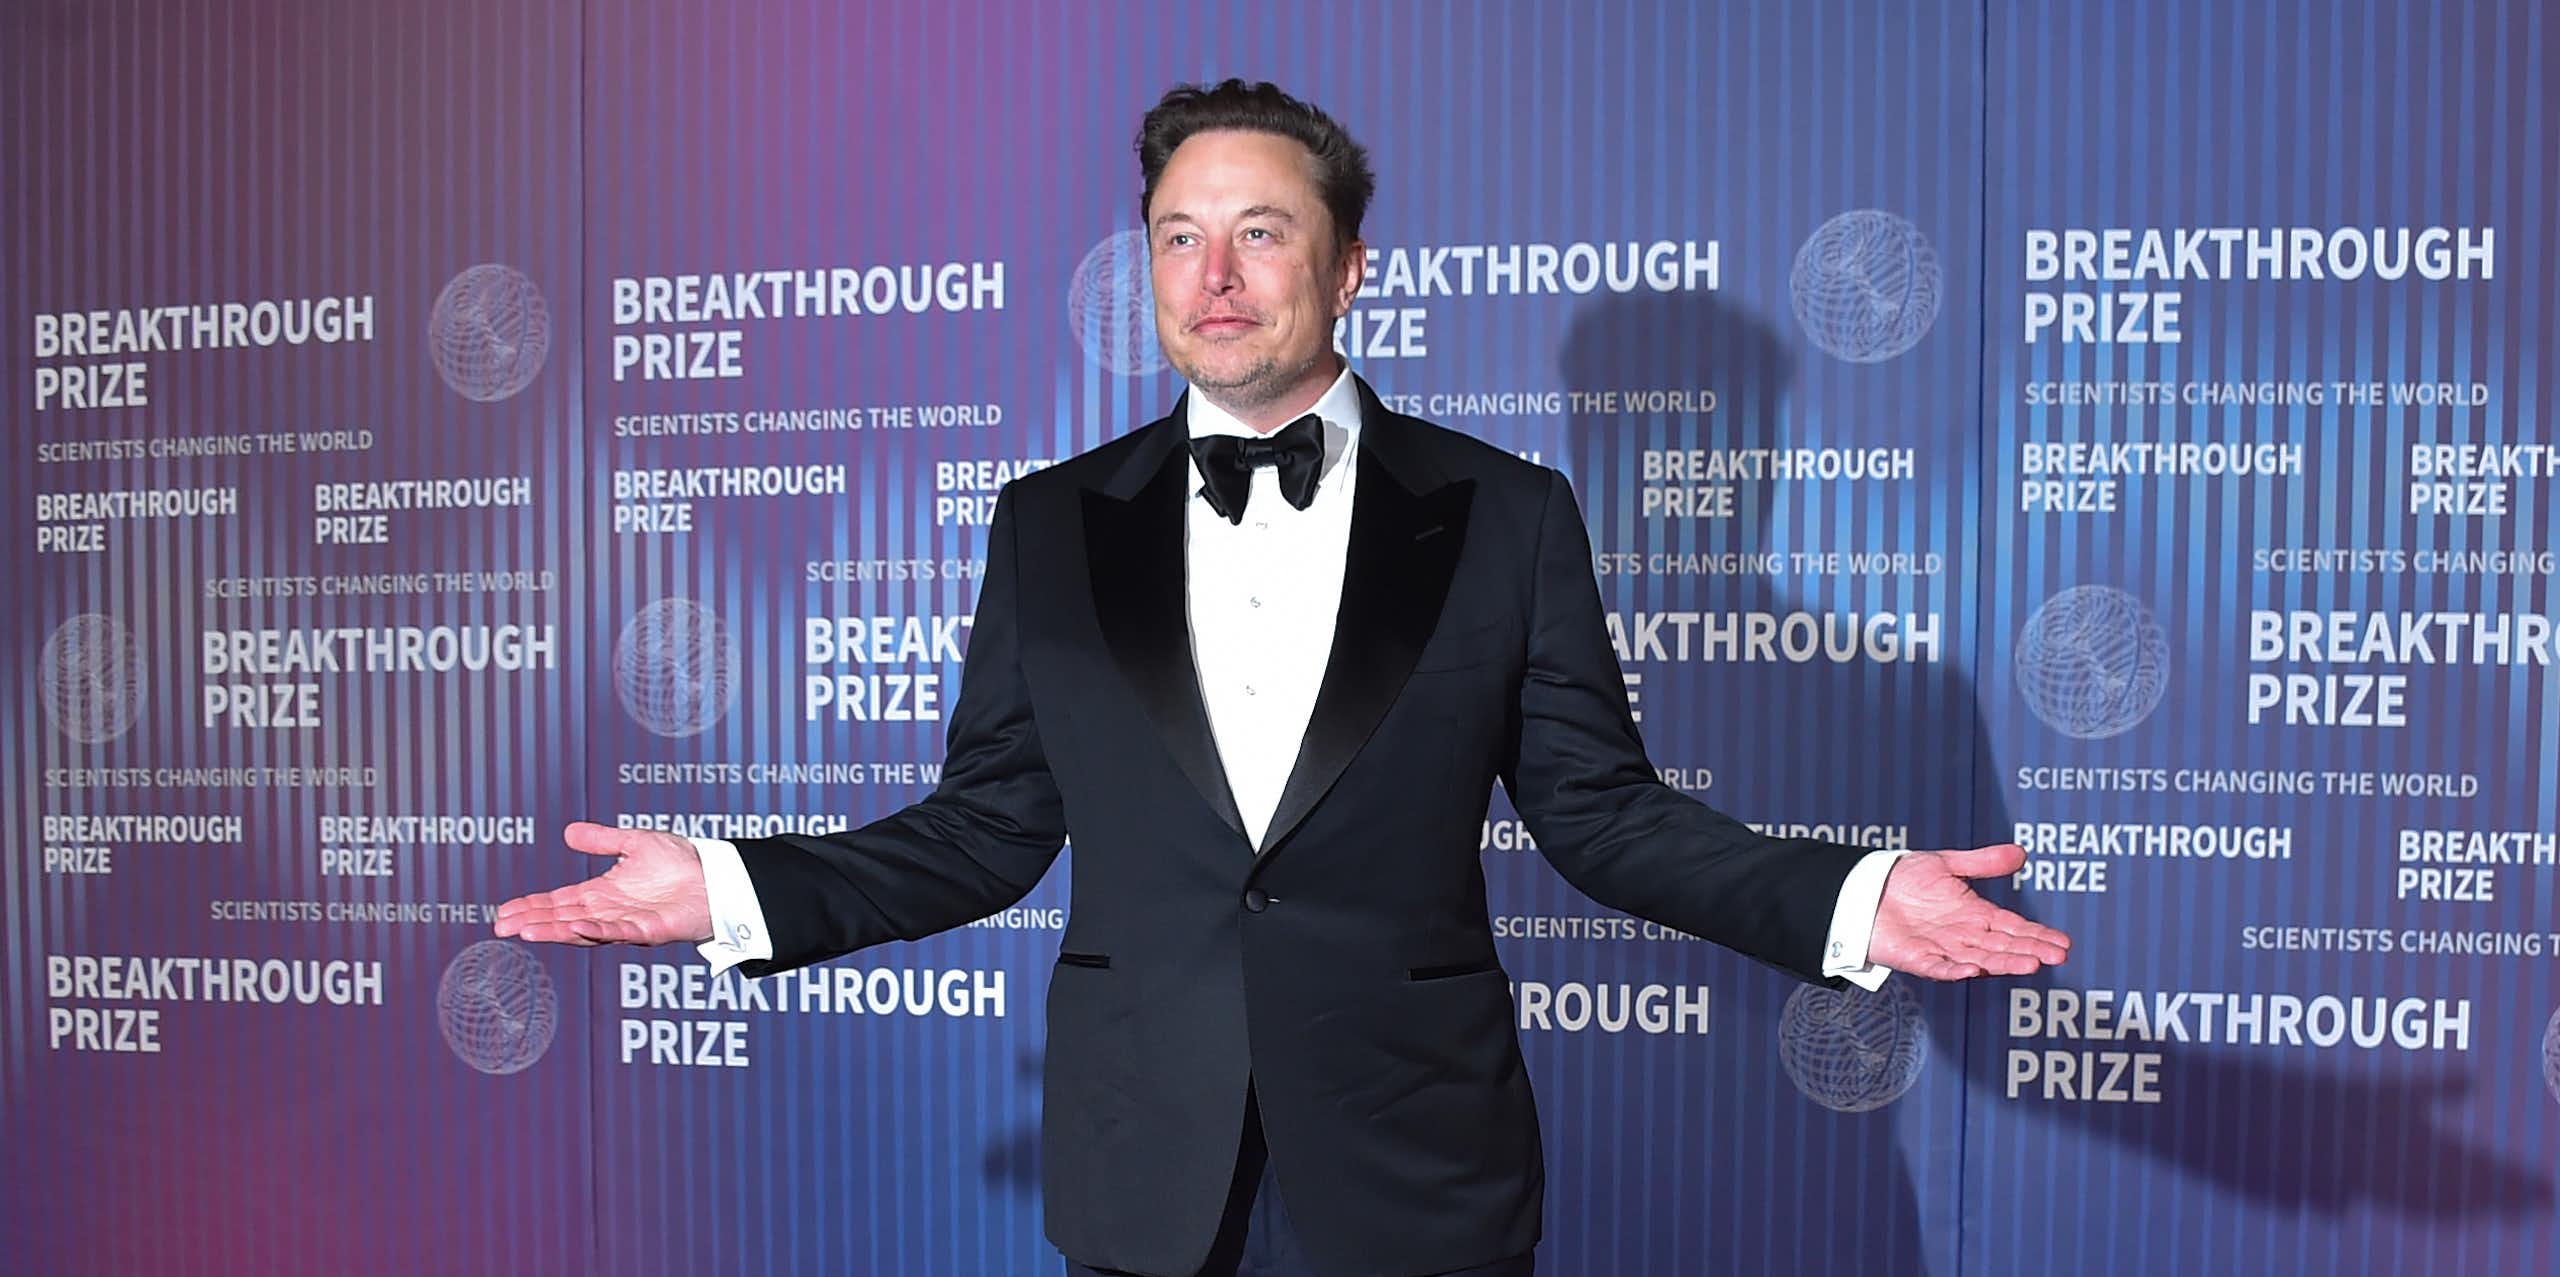 Elon Musk standing on a red carpet.